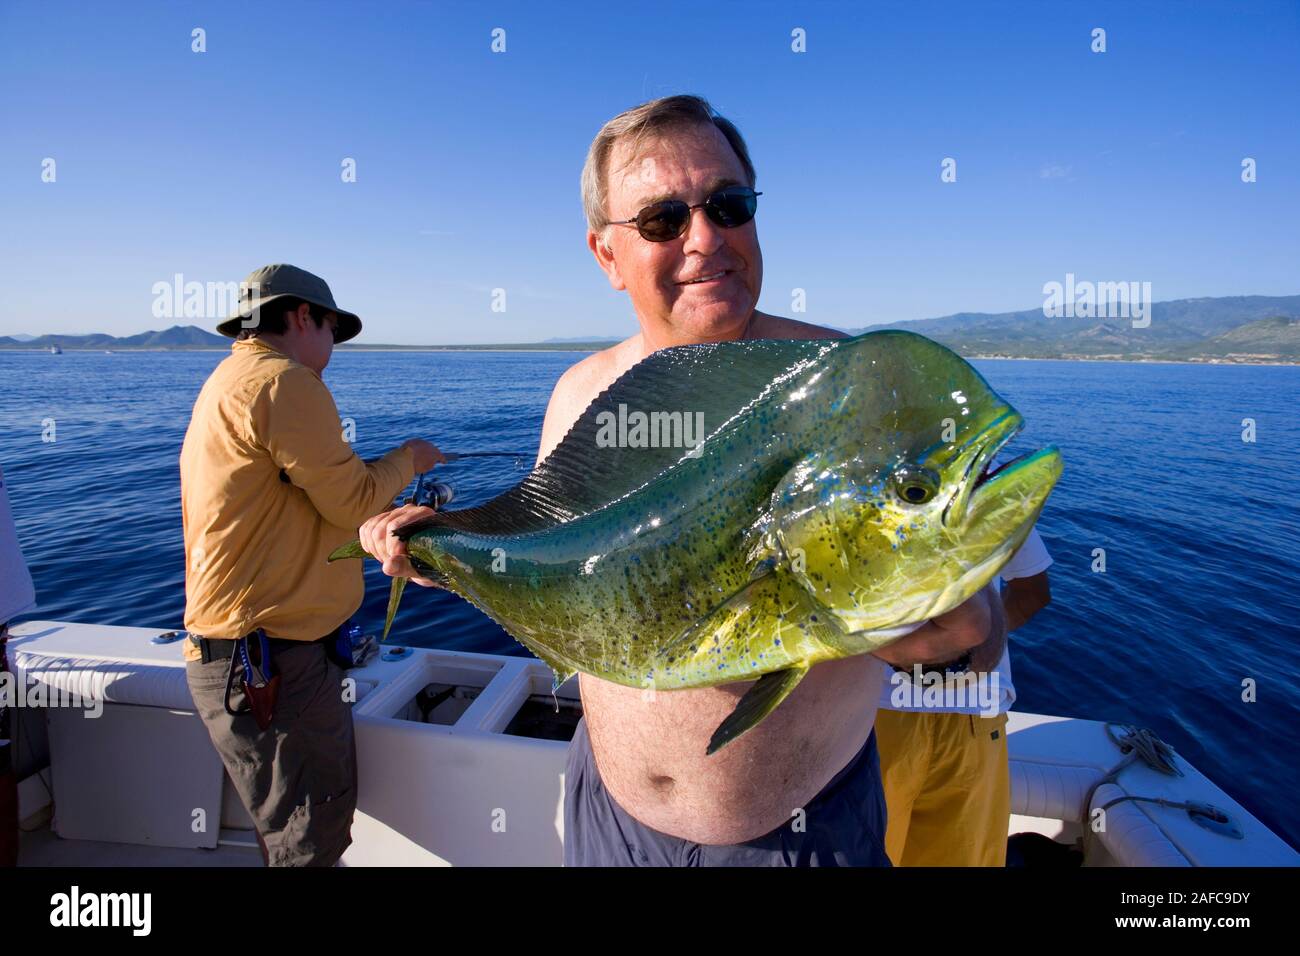 Man holding freshly caught mahi mahi fish in Baja, Mexico Model Released Photo Stock Photo